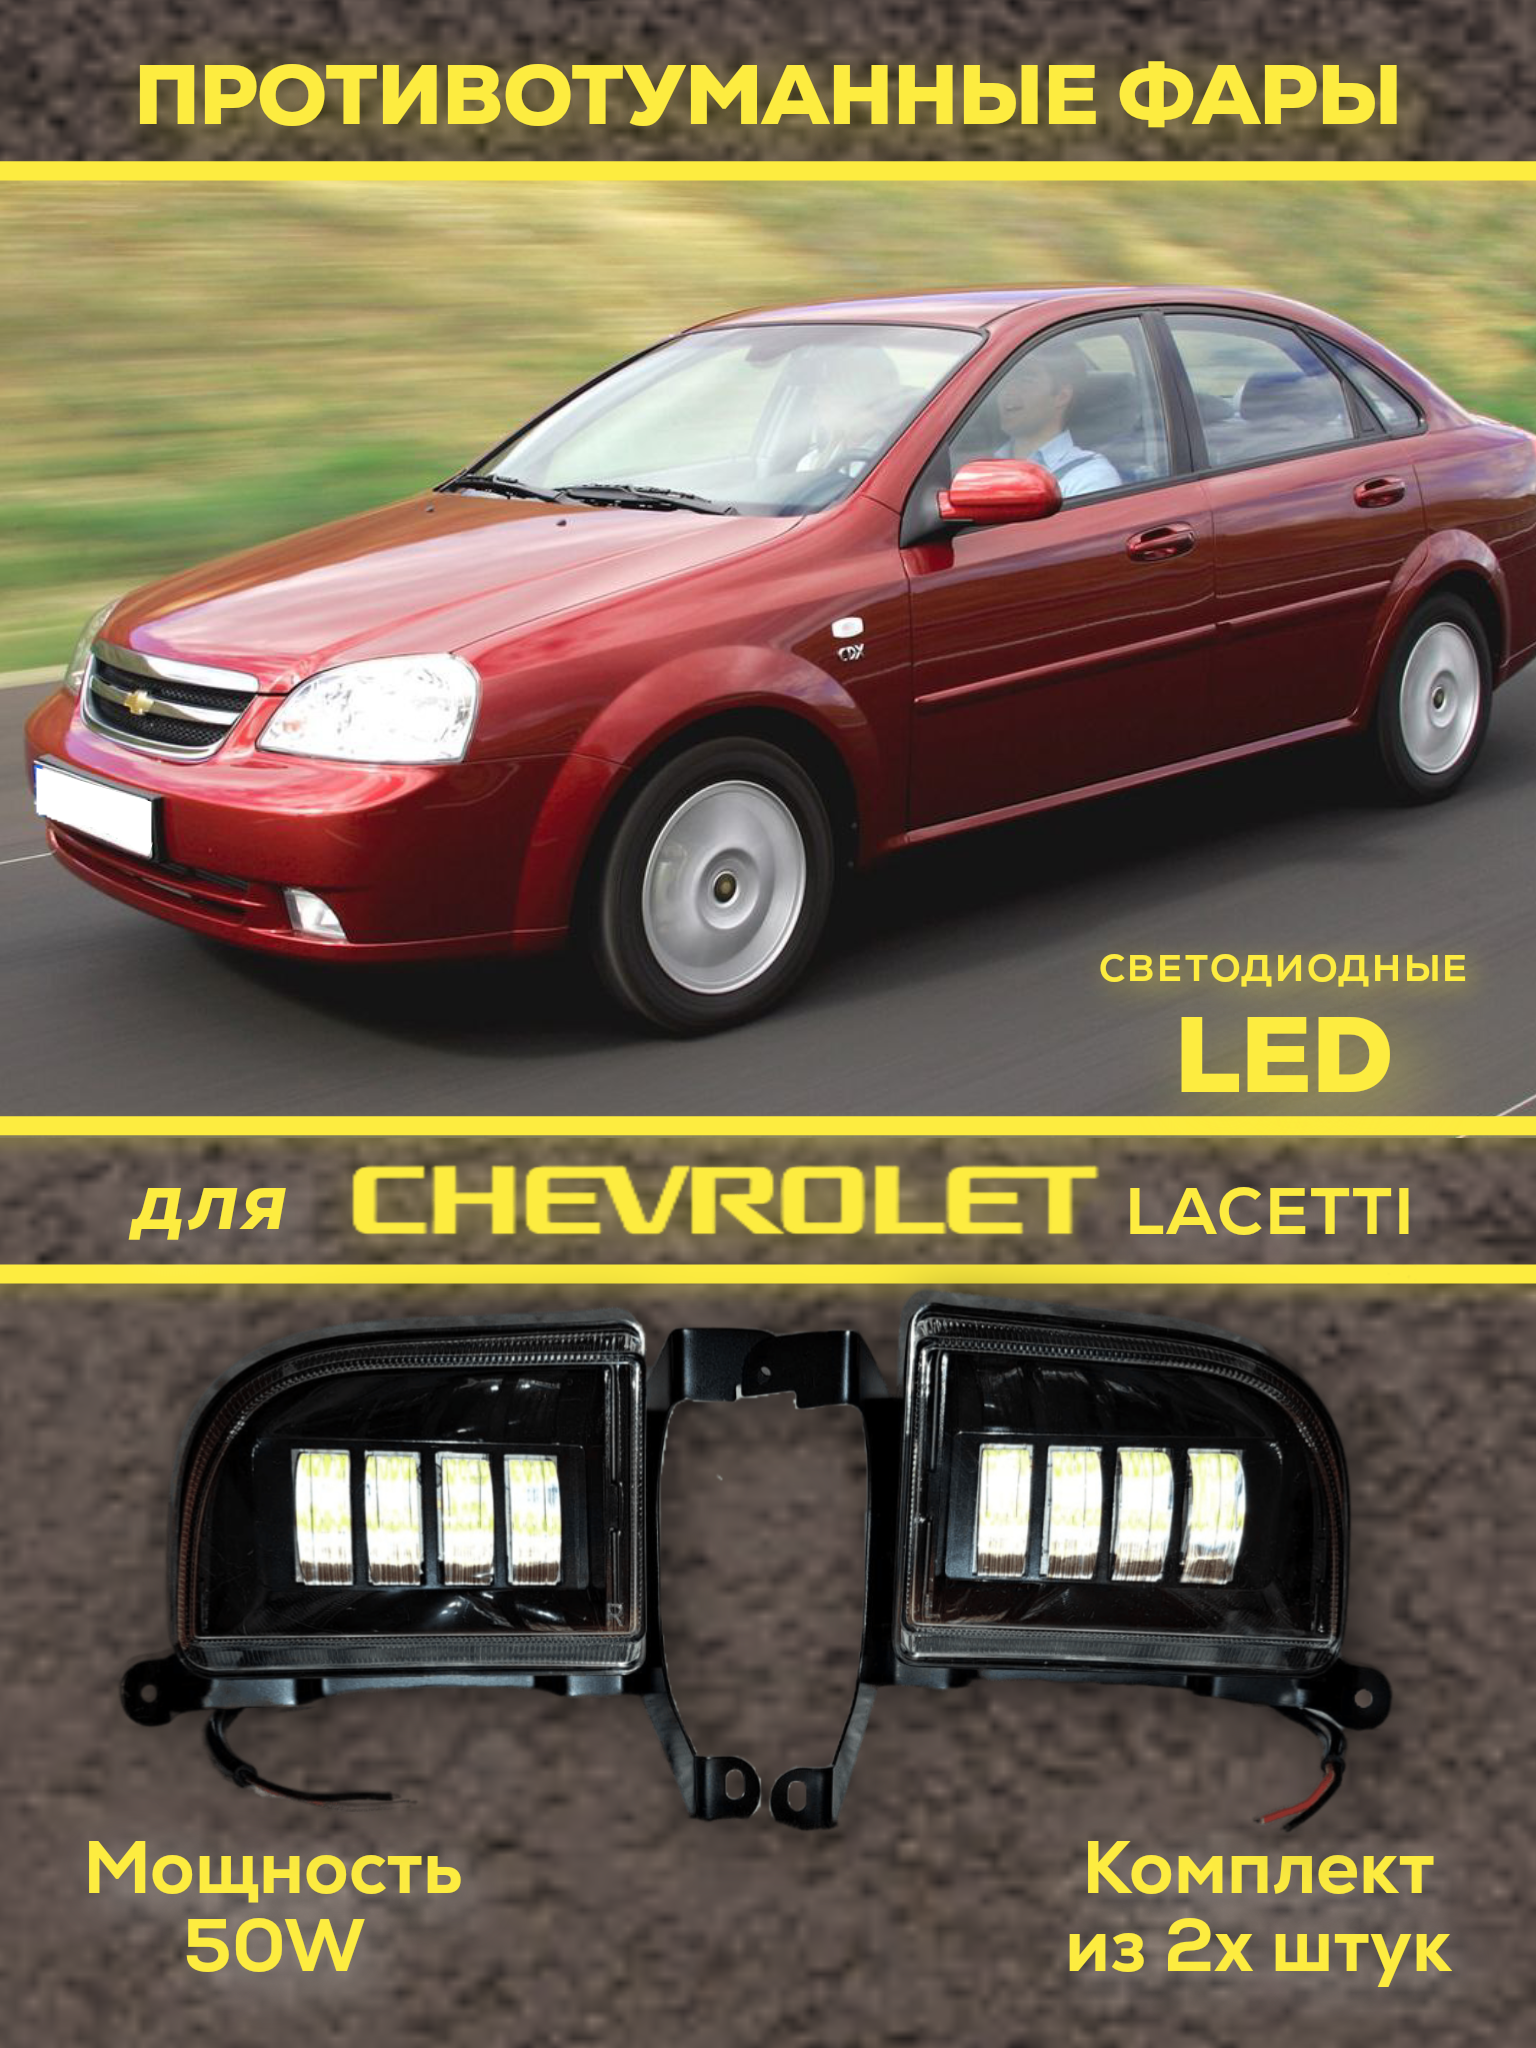 LED-avto Противотуманные фары ПТФ светодиодные LED Chevrolet Lacetti